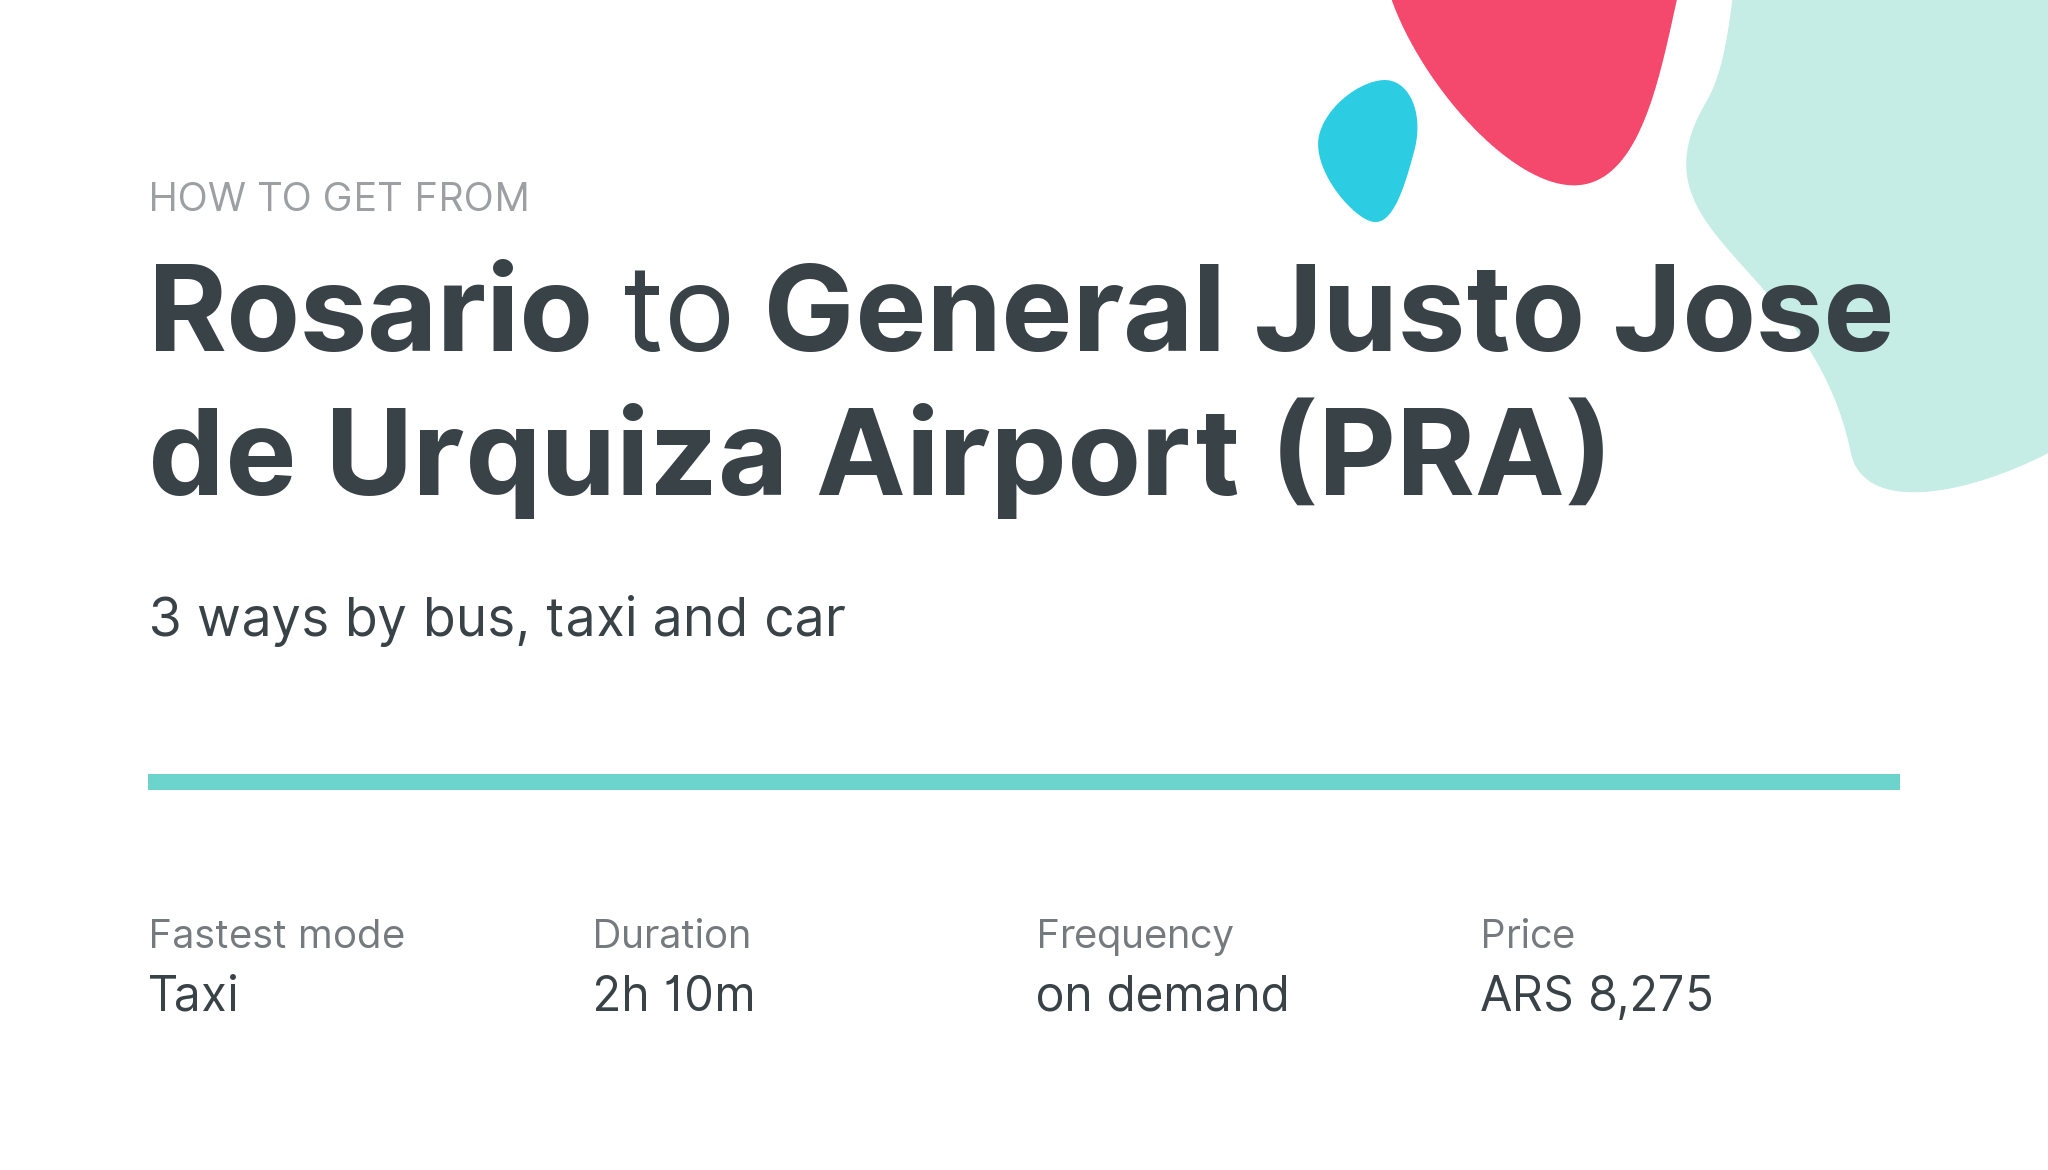 How do I get from Rosario to General Justo Jose de Urquiza Airport (PRA)